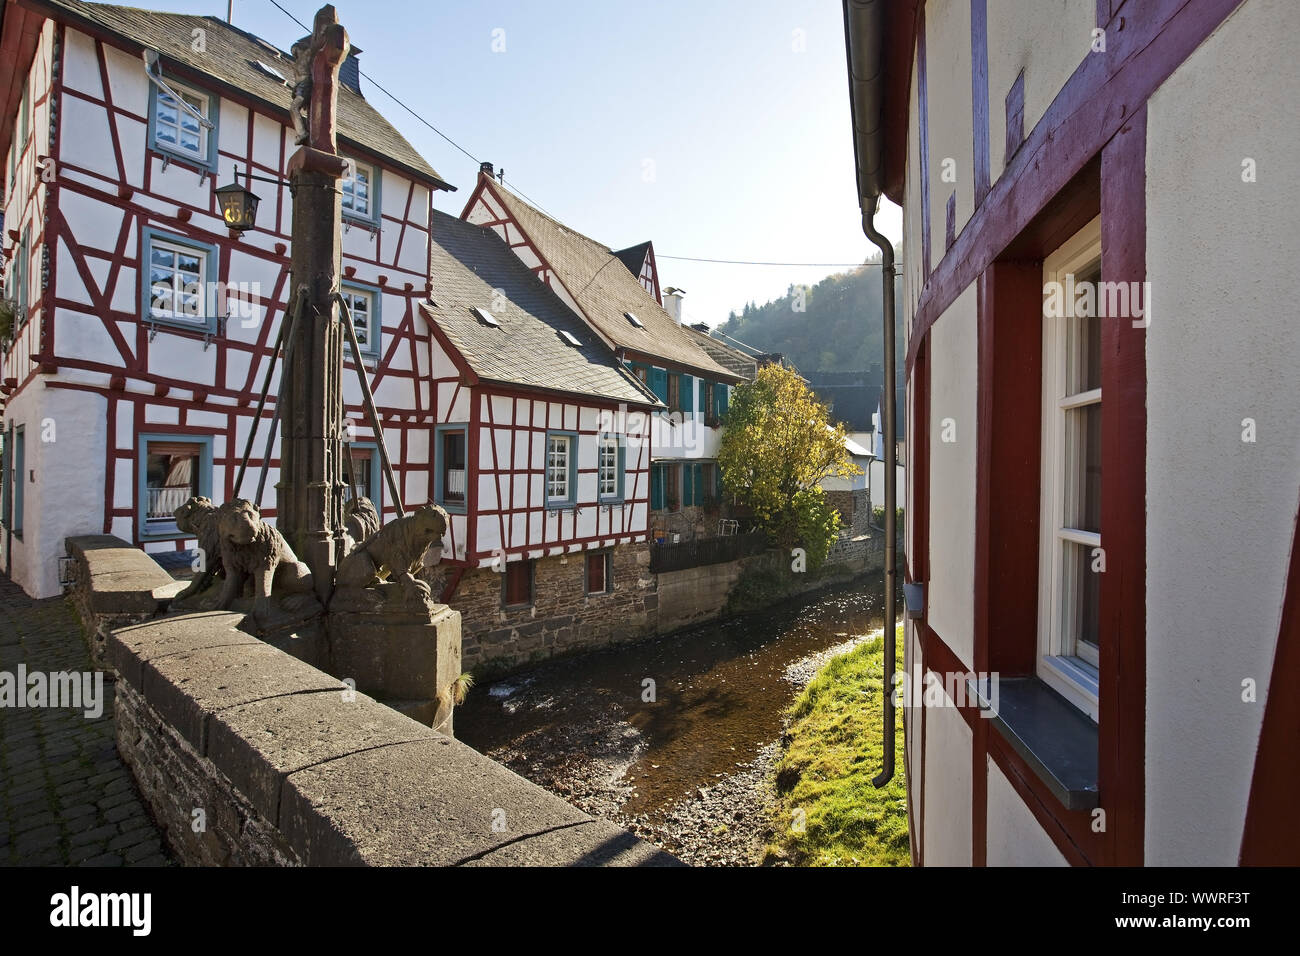 historical city with half-timbered houses, Monreal, Eifel, Rhineland-Palatinate, Germany, Europe Stock Photo